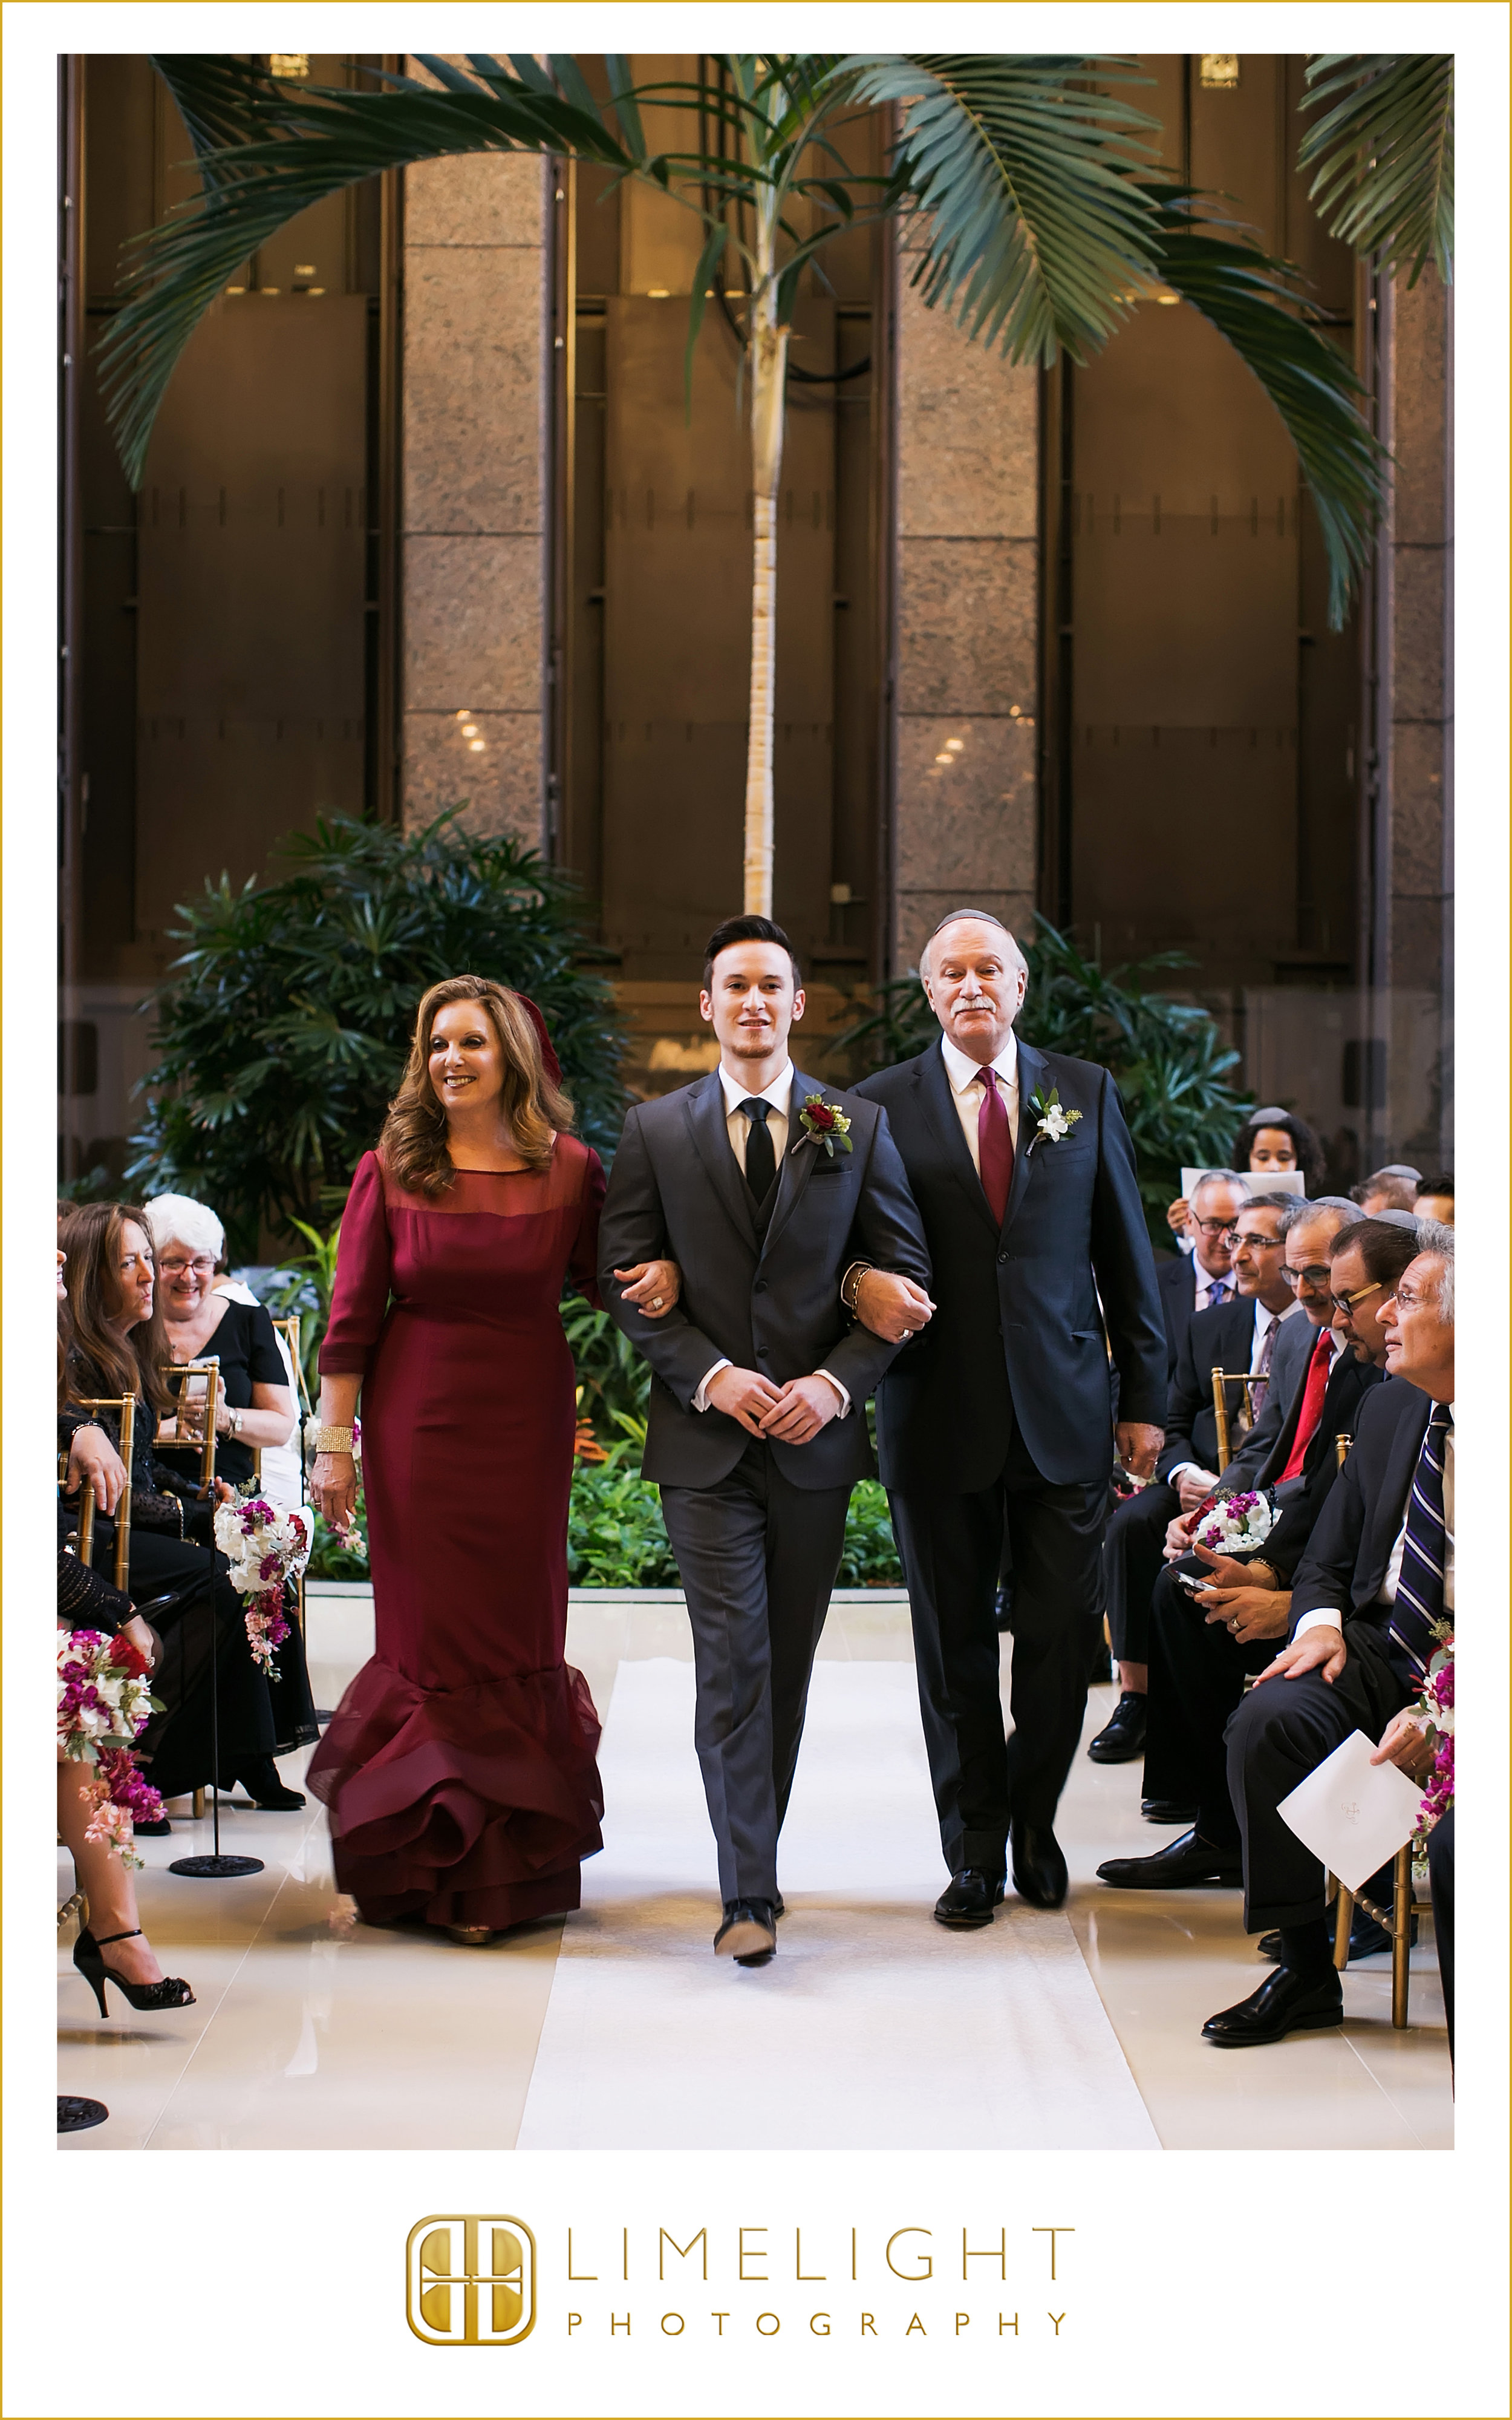 Family | Jewish | Wedding